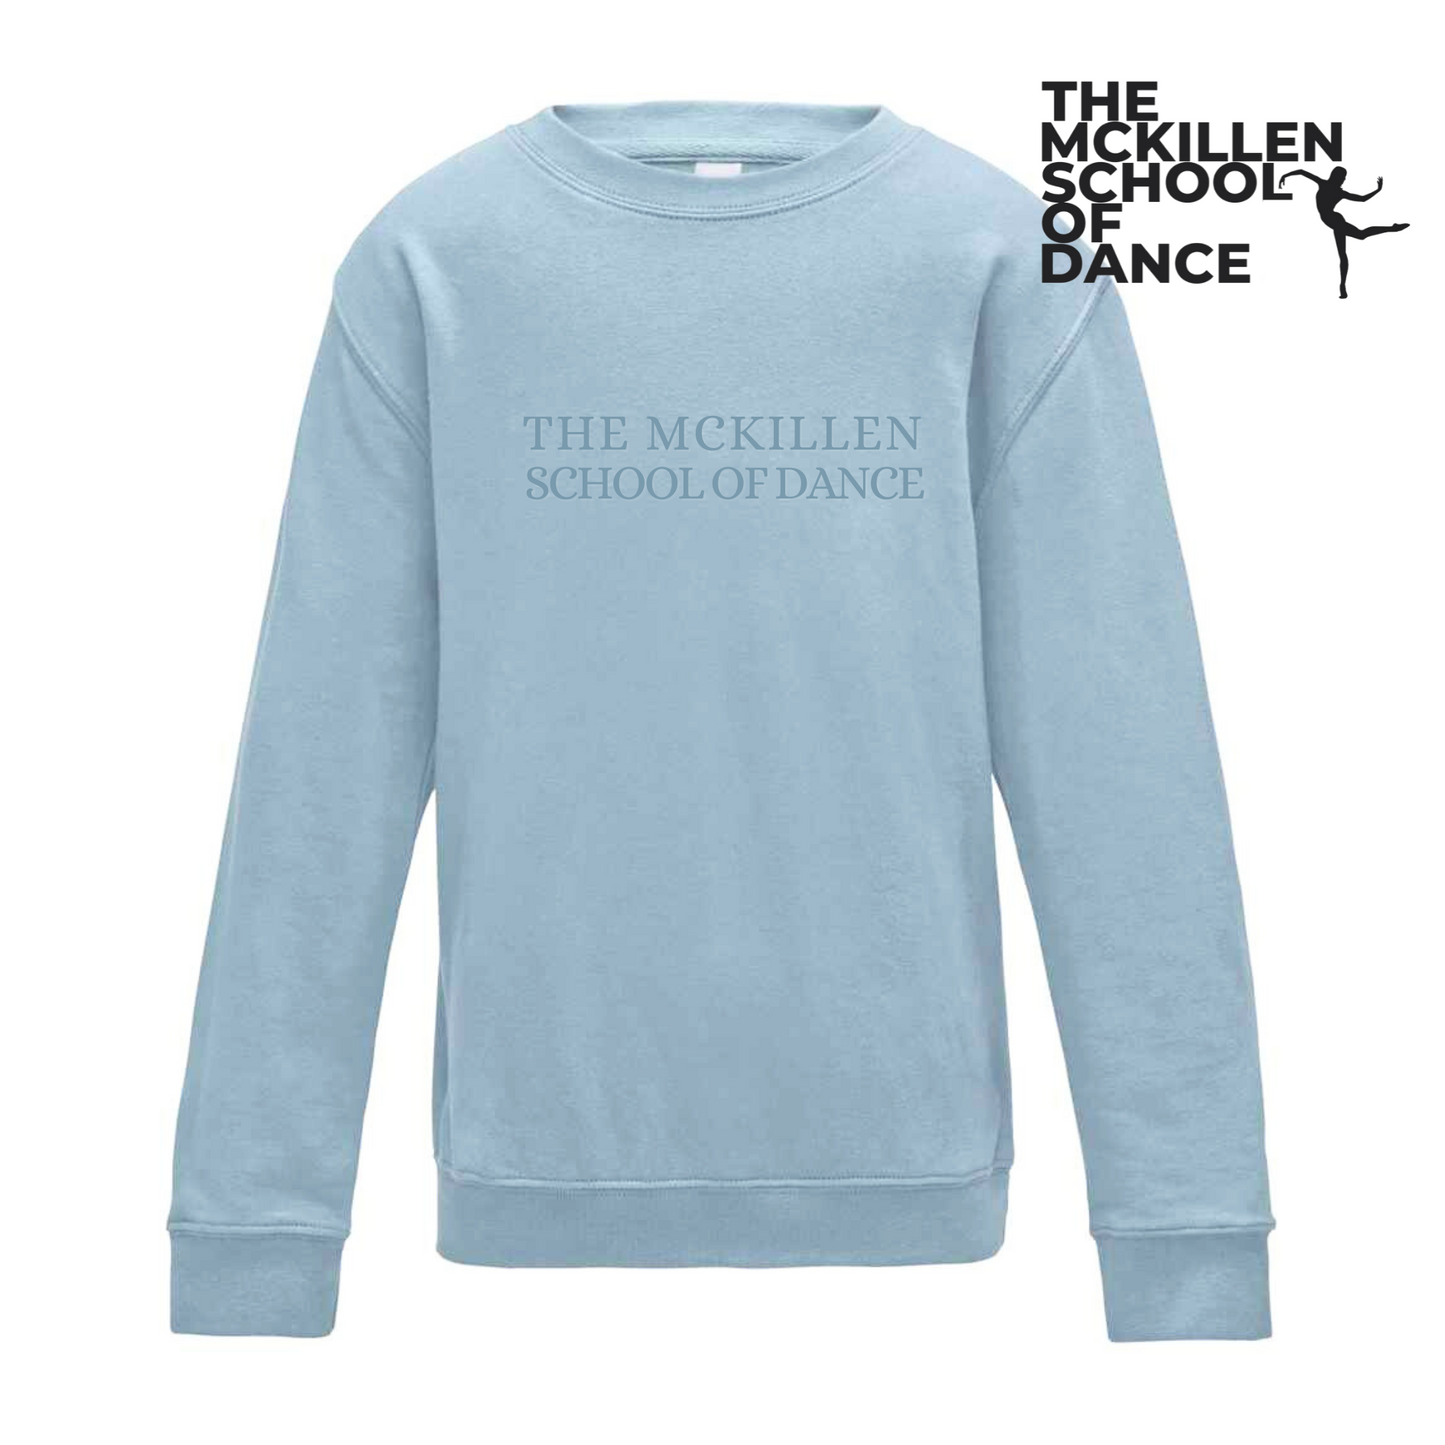 Adults Embroidered Sweatshirts : The Mckillen School of Dance